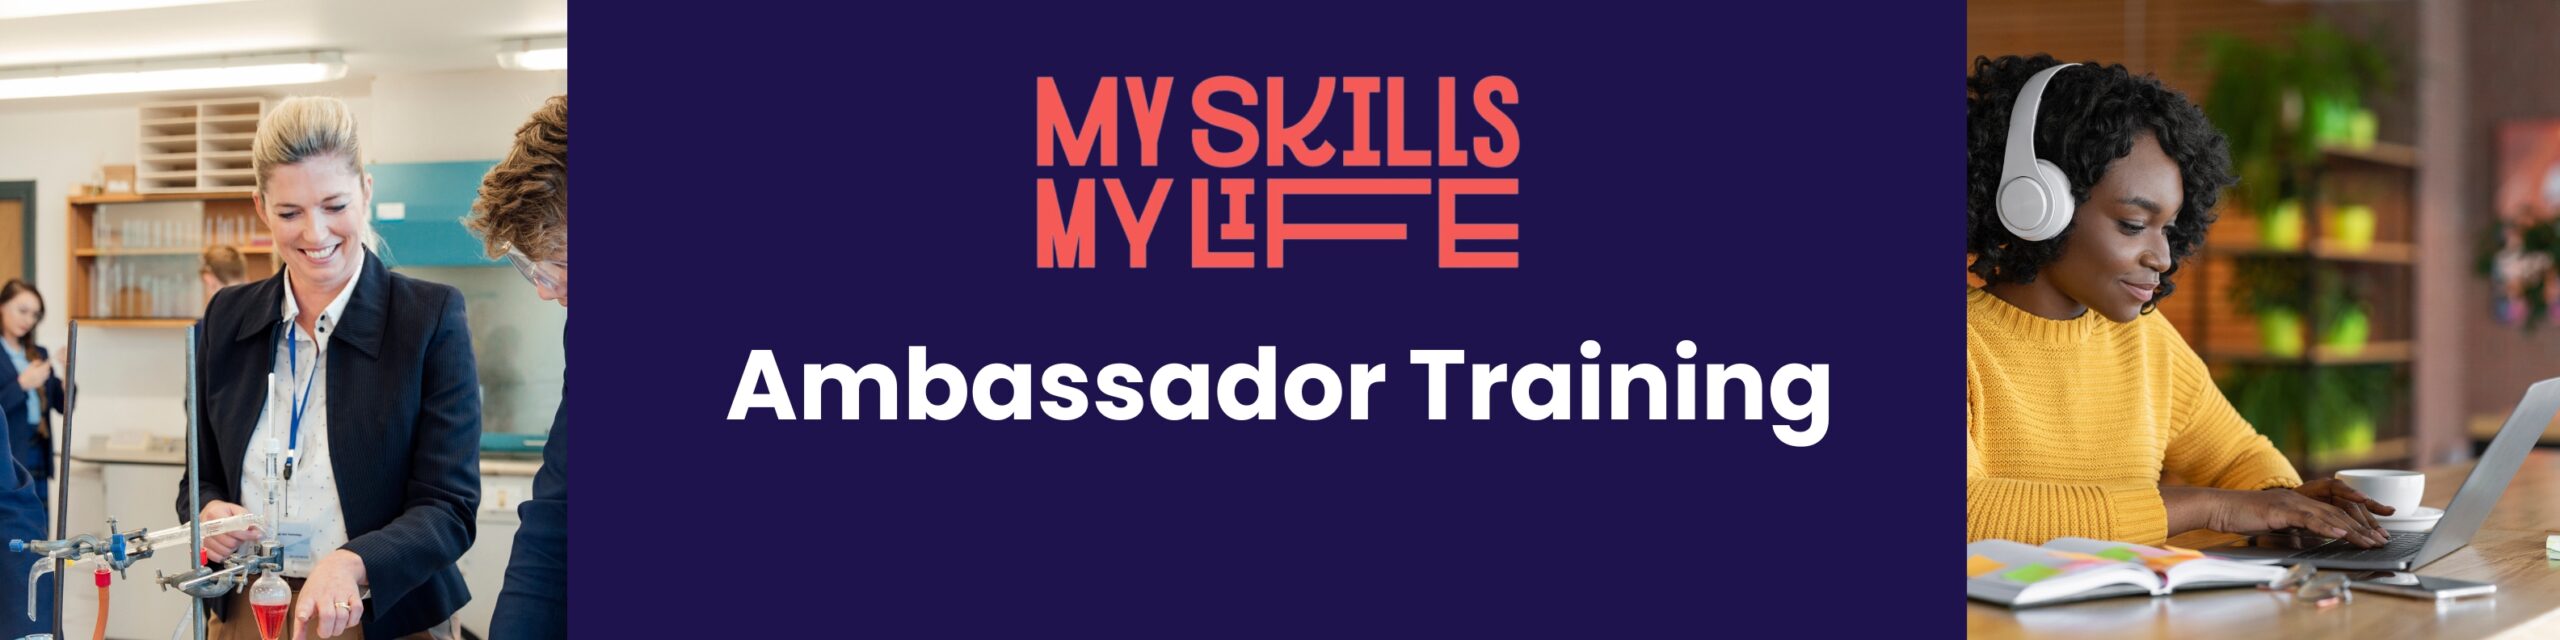 My skills my life website banners (5)